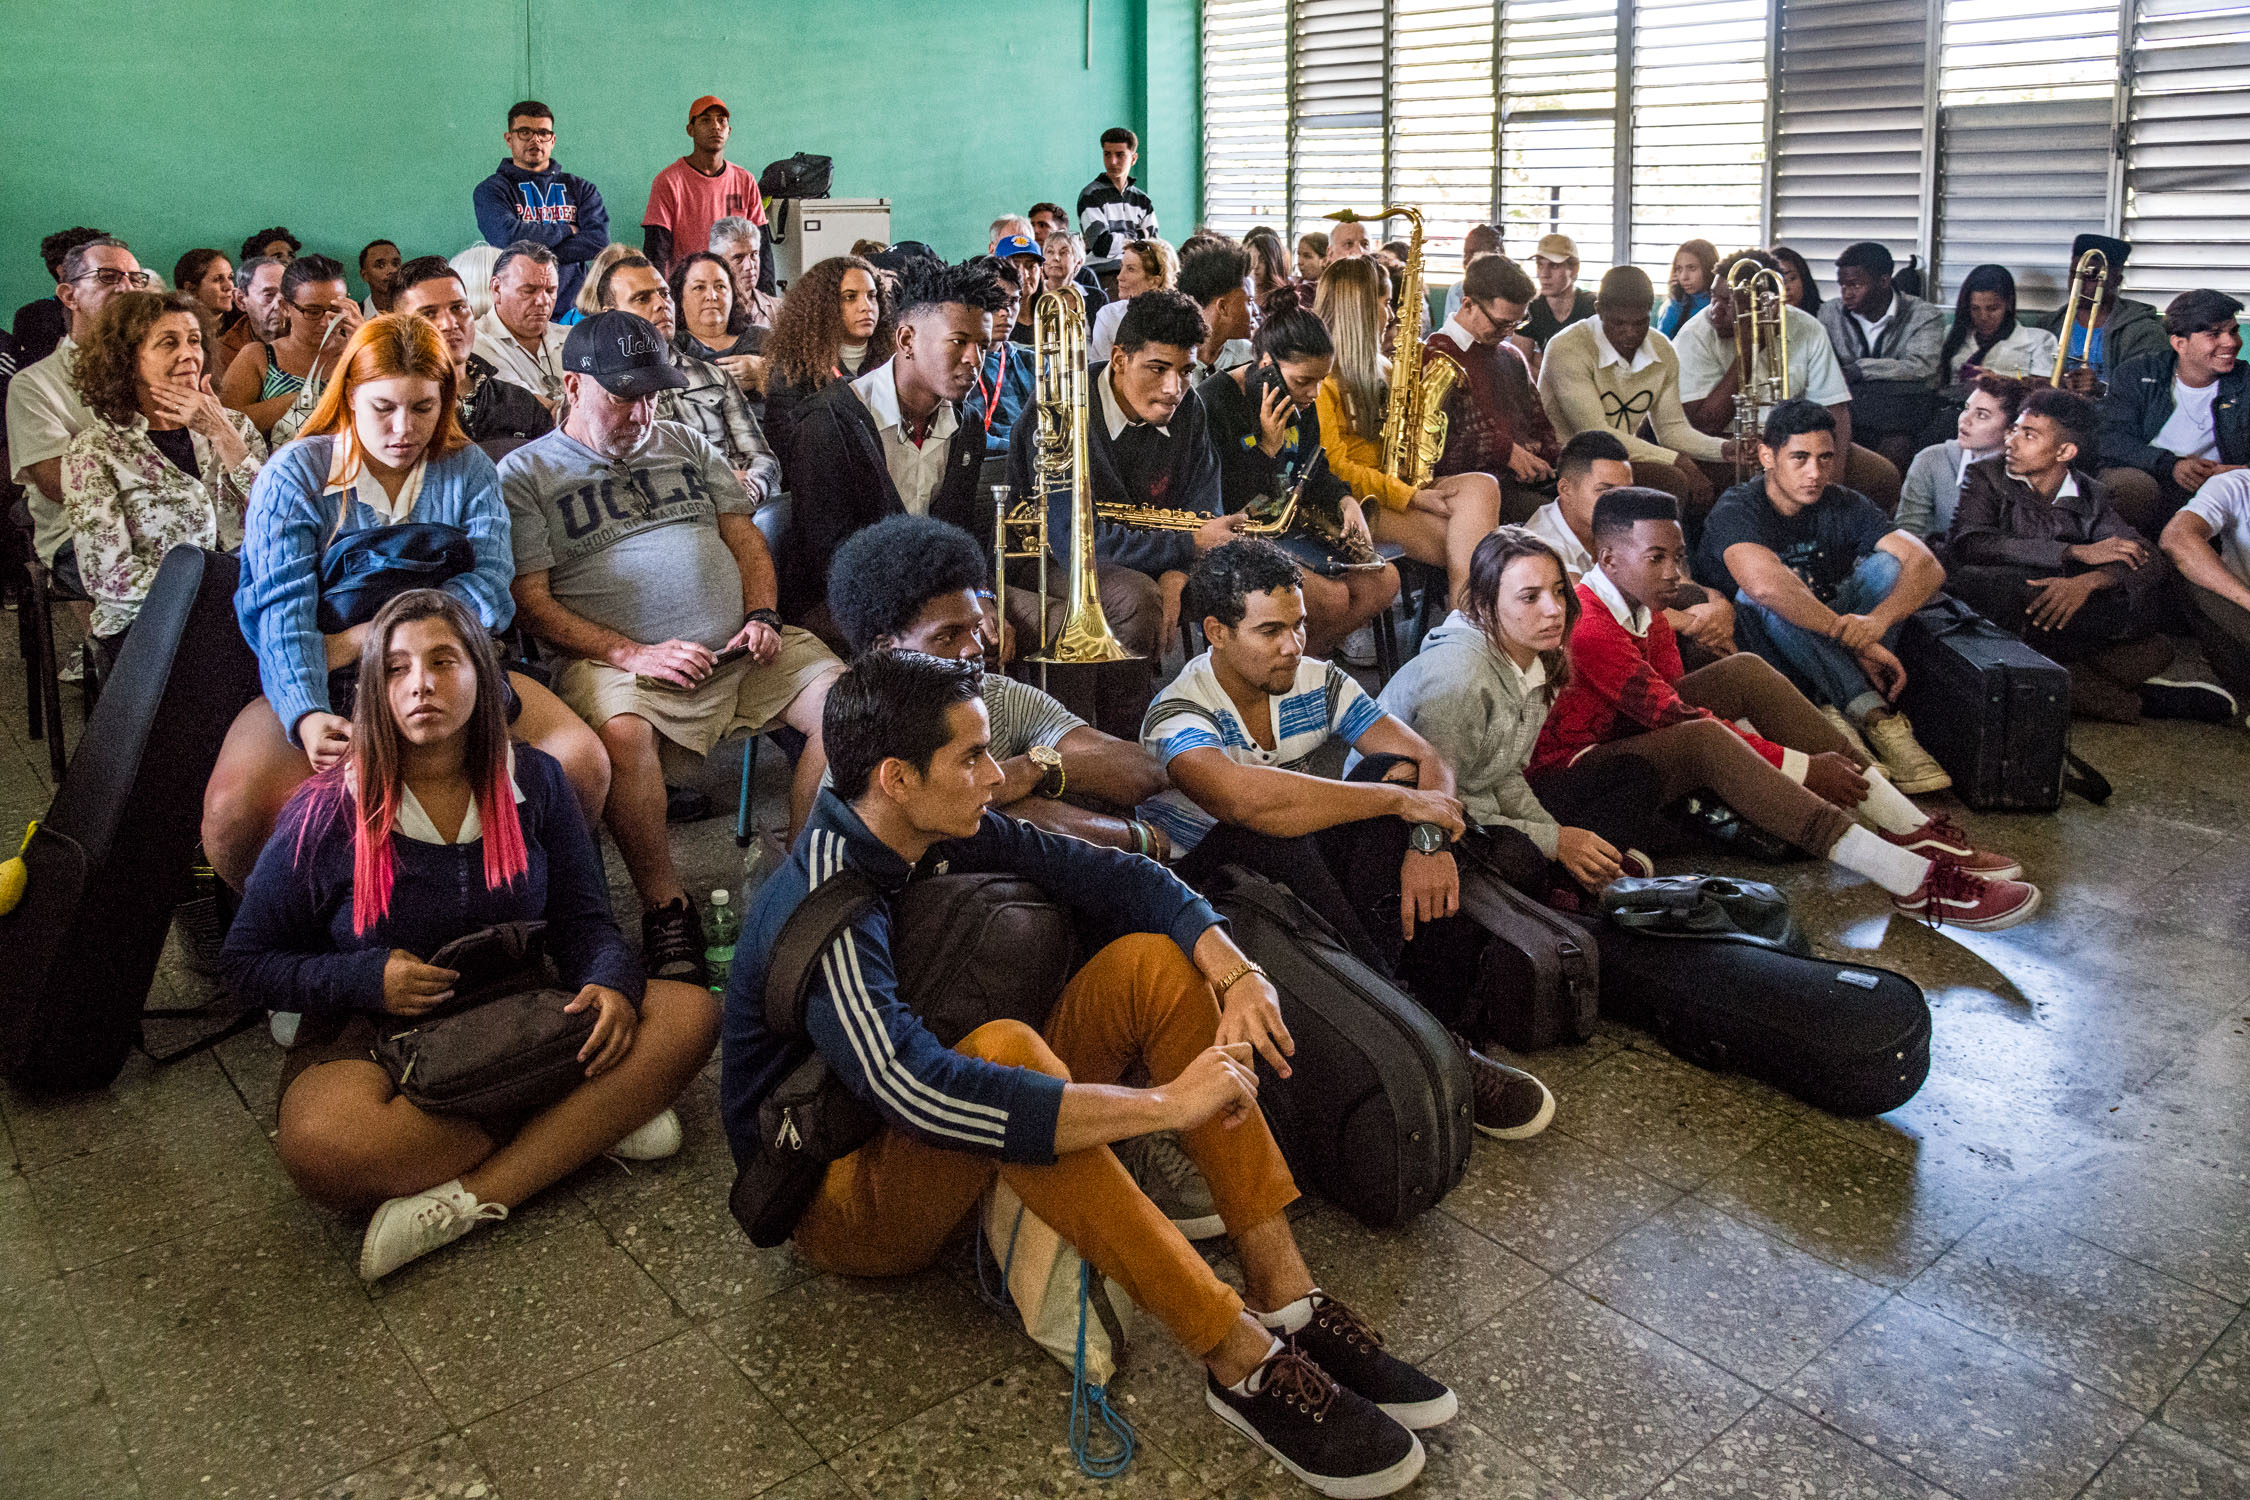 Students at Escuela Nacional de Arte (La ENA) prior to Dafnis Prieto Sextet master class, Havana, Cuba, January 2019 (Photo by David Garten)